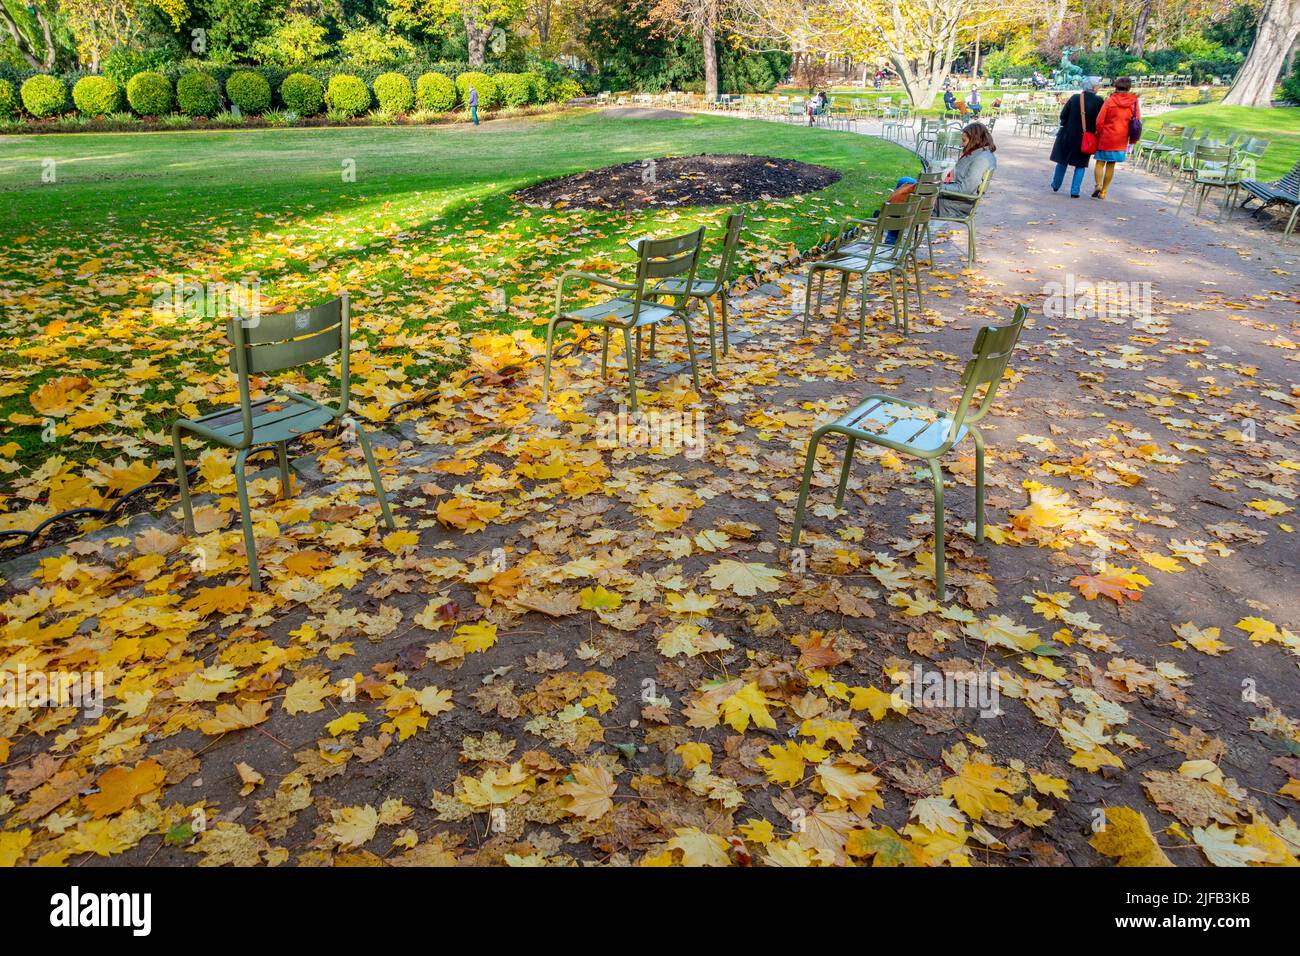 France, Paris, Luxembourg garden in autumn Stock Photo